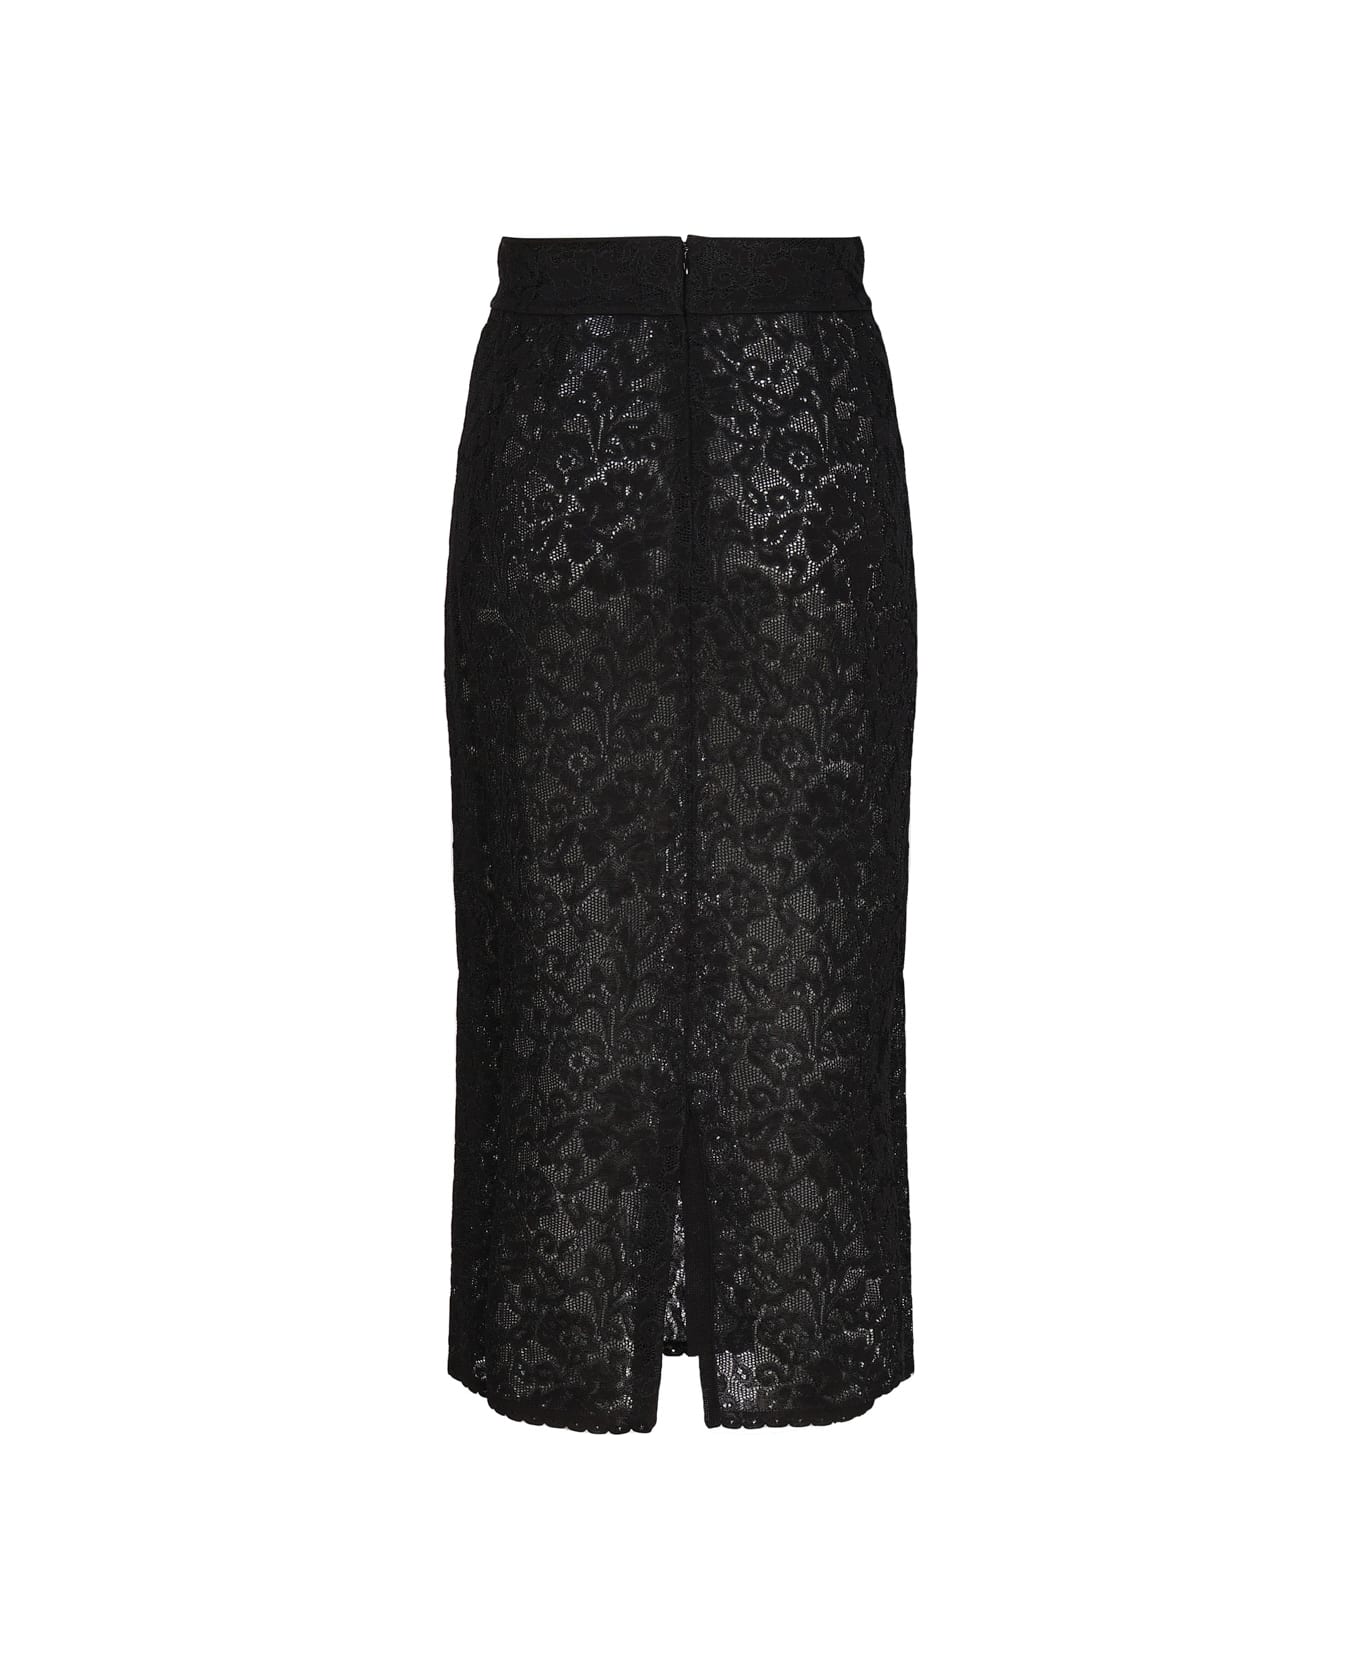 Dolce & Gabbana Lace Midi Skirt - Black